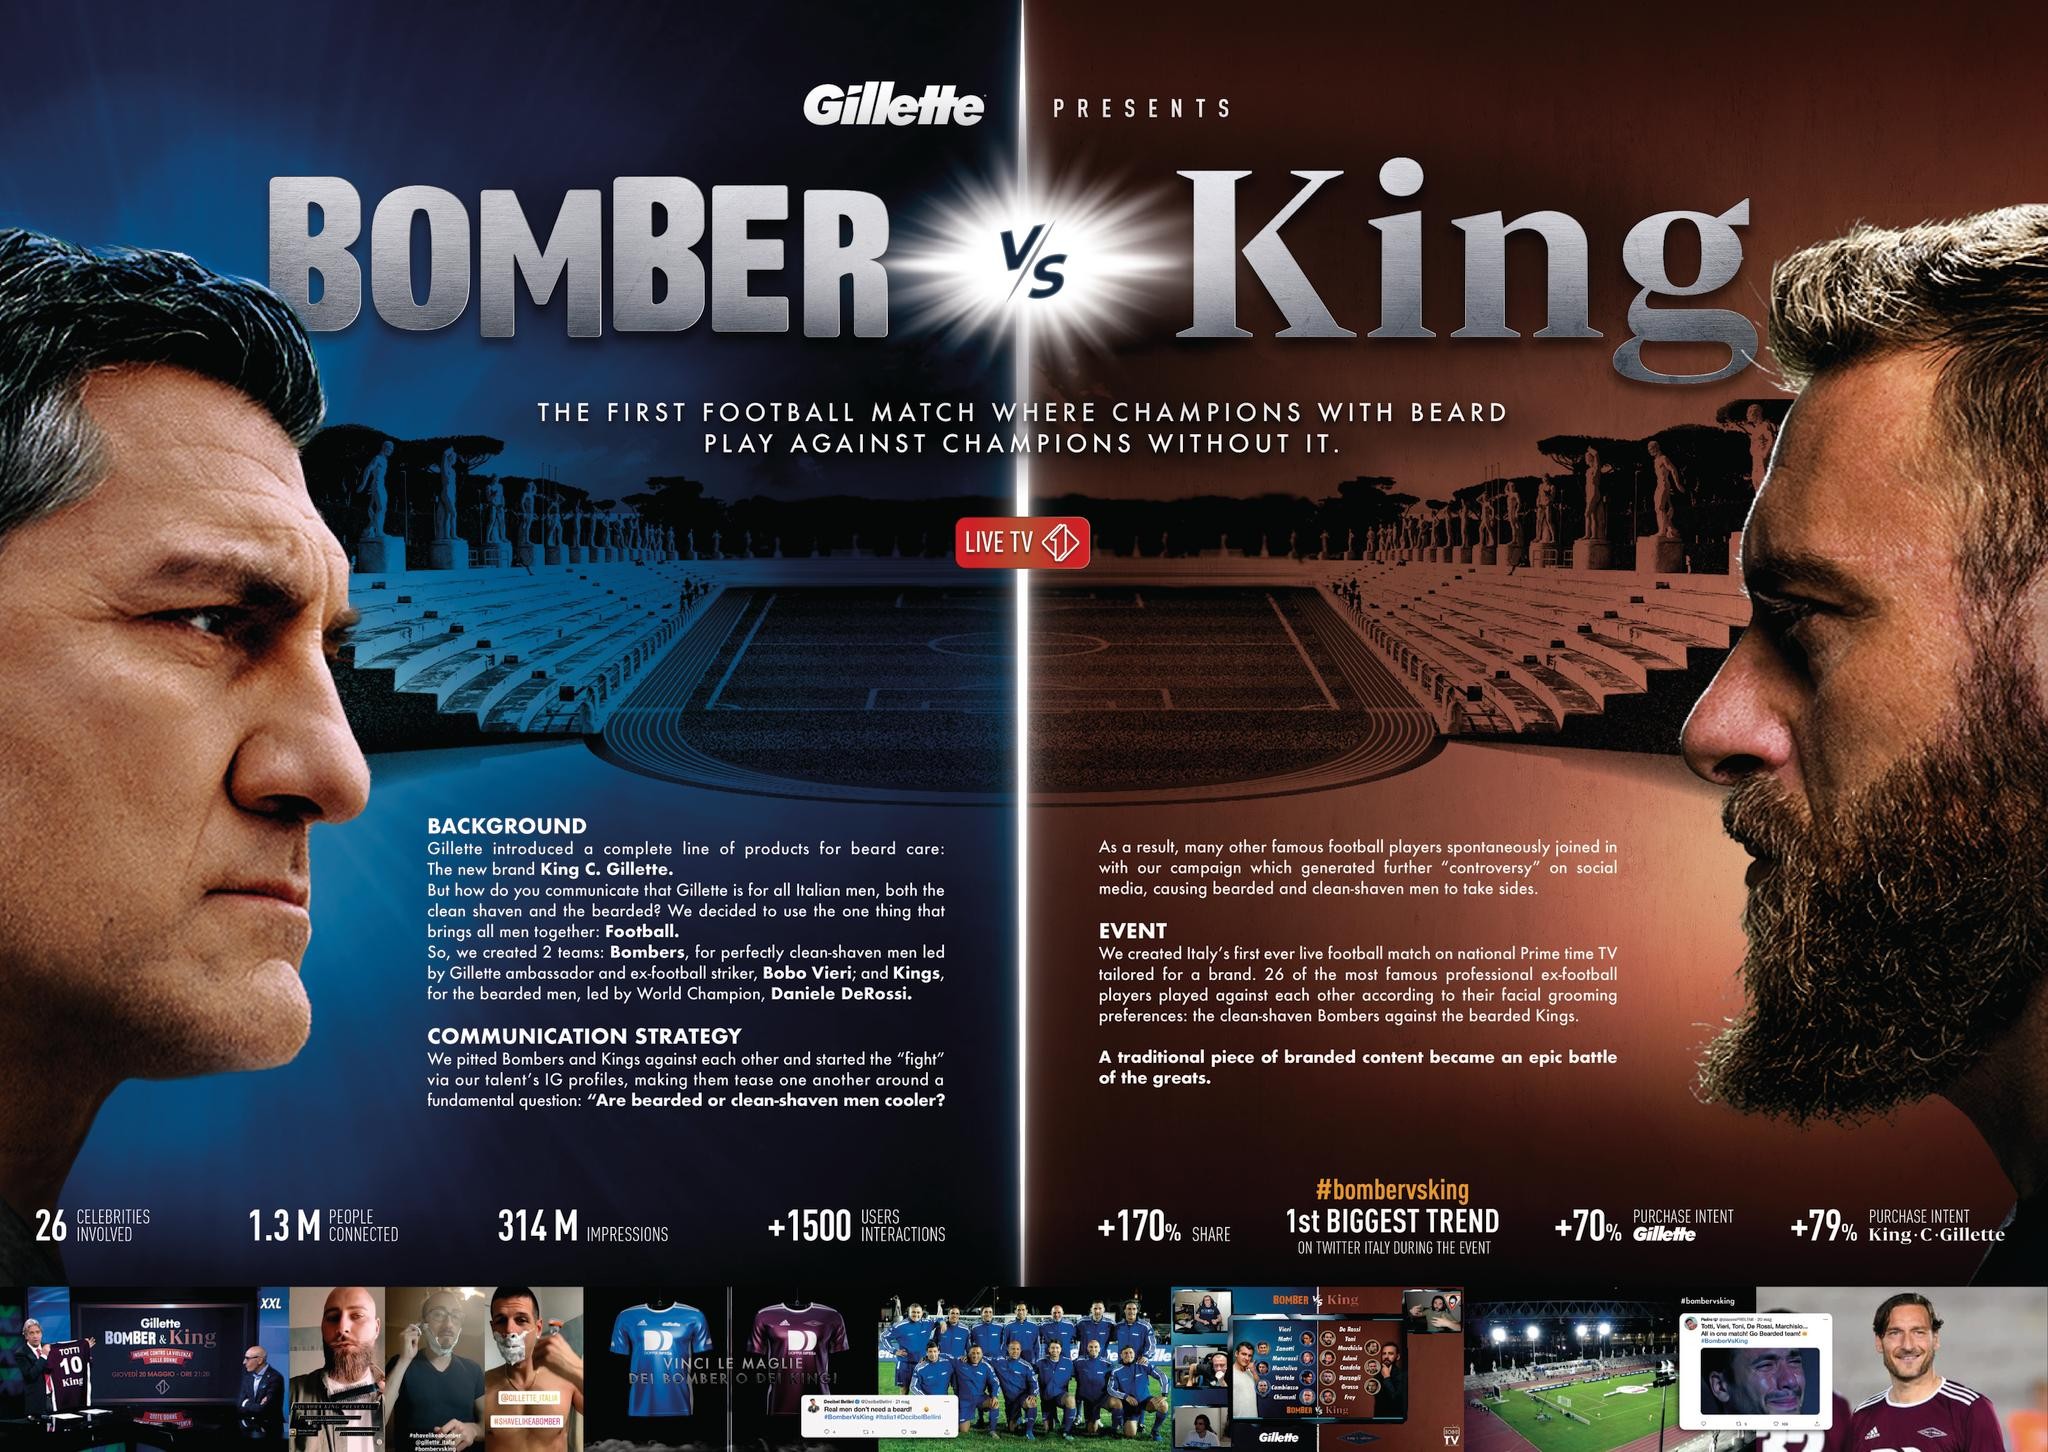 Bomber vs. King